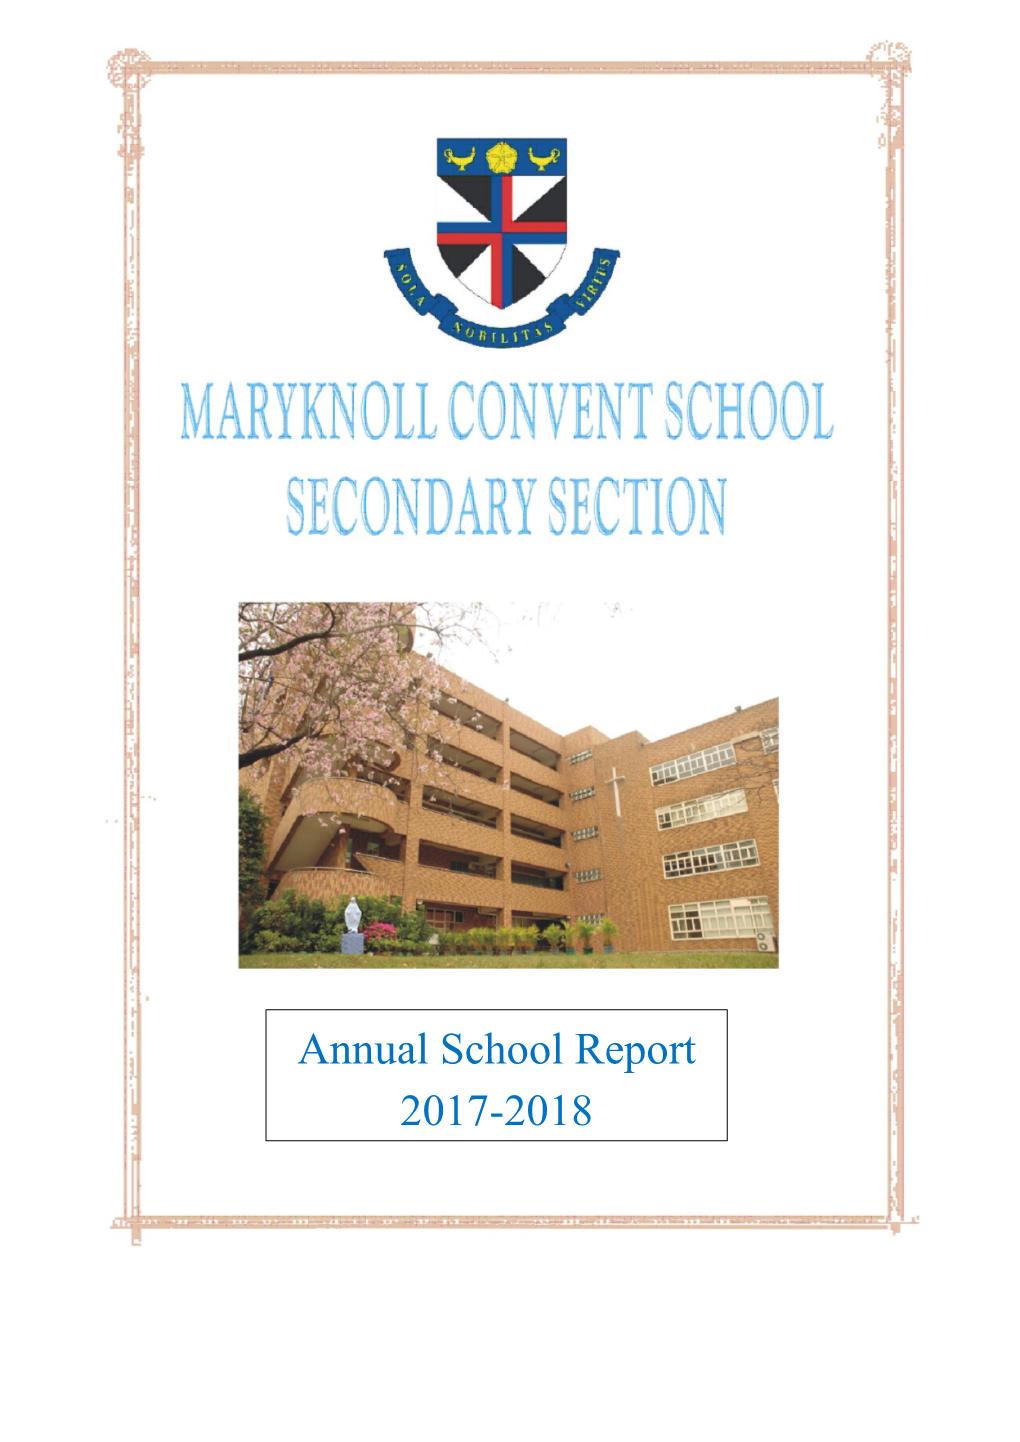 Annual School Report 2017-2018